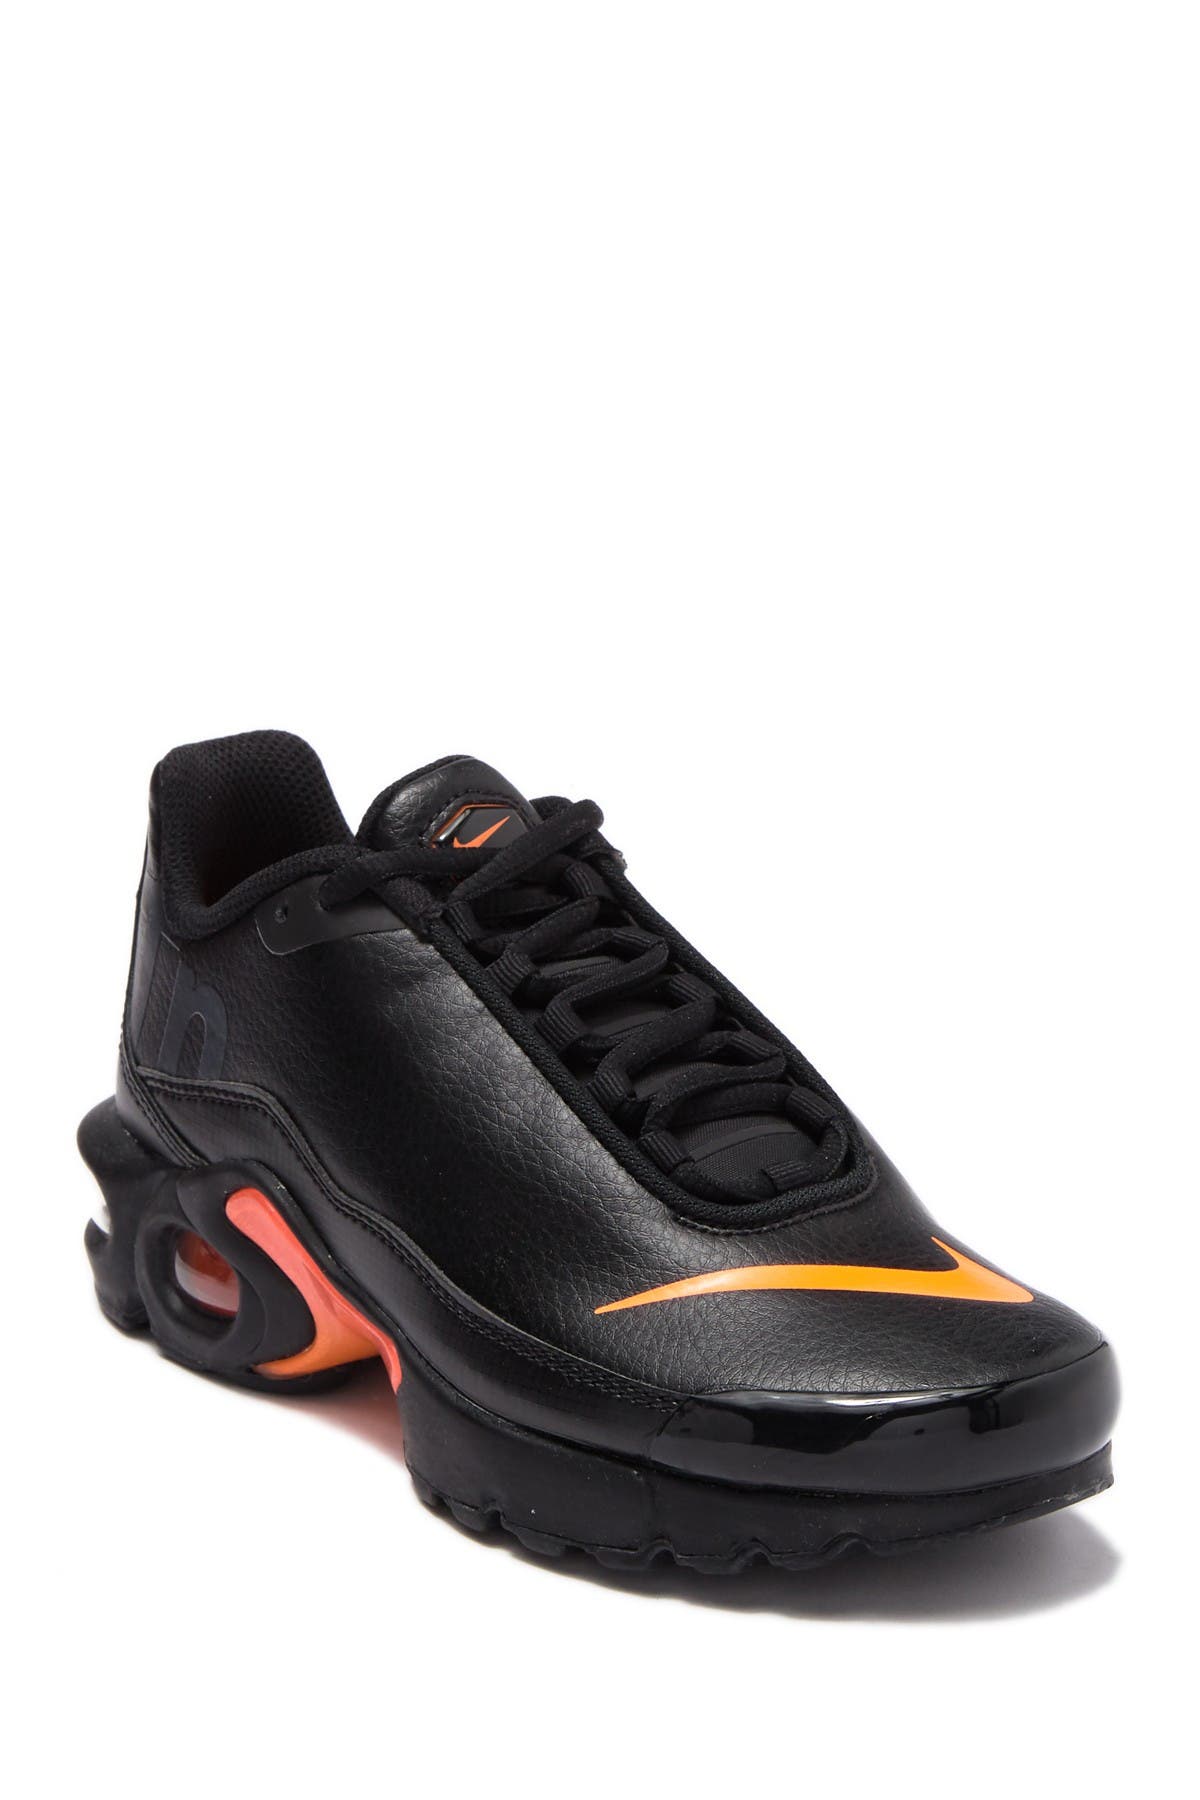 Nike | Air Max Plus TN SE BG Sneaker 